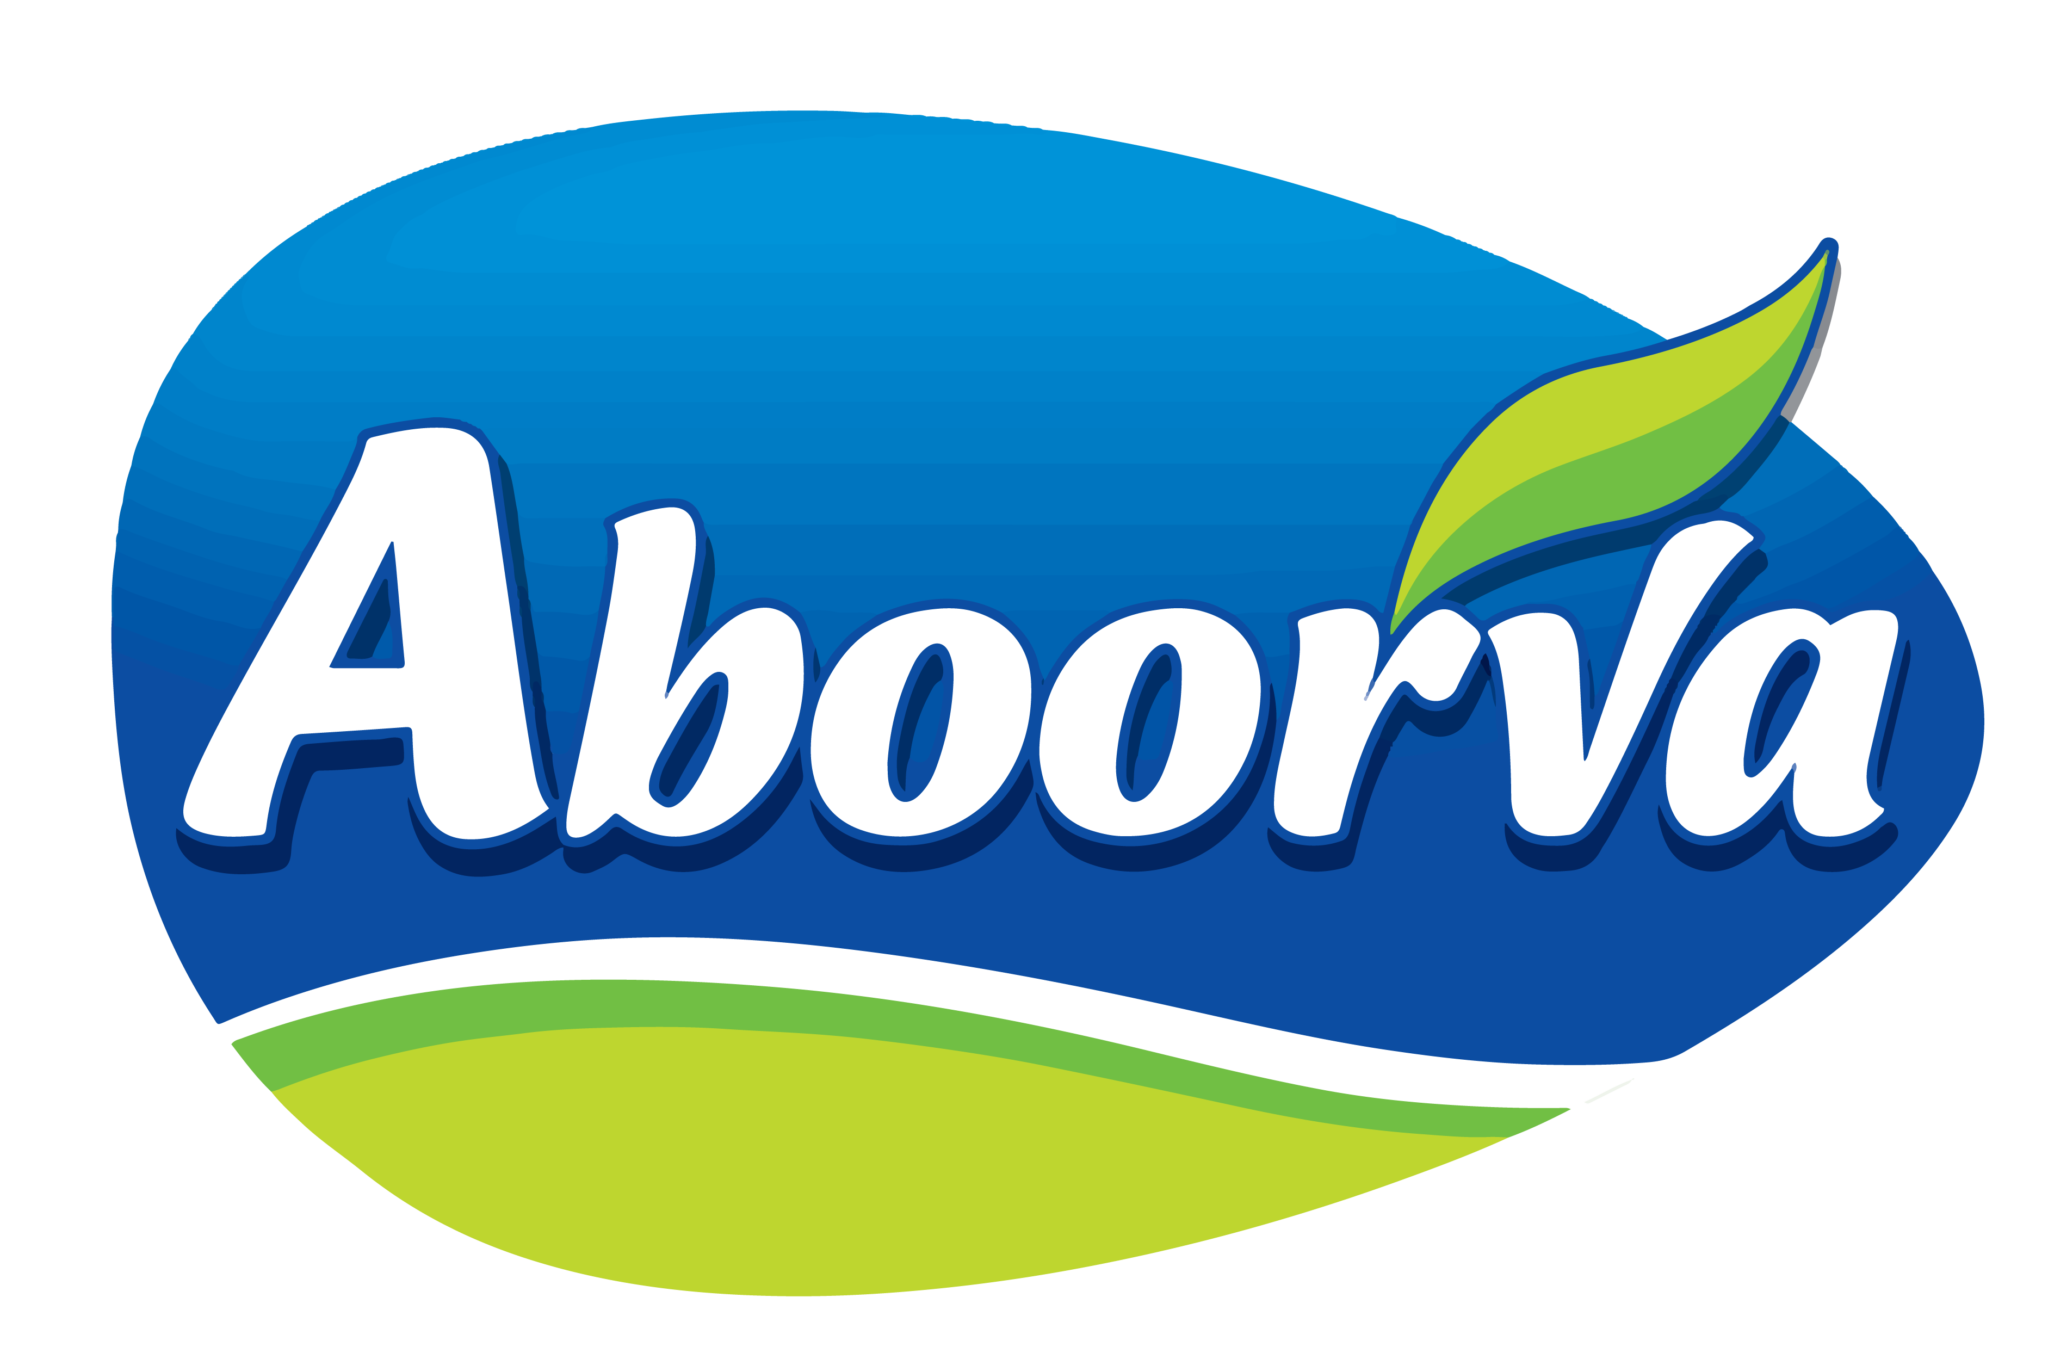 Aboorva-Logo-01